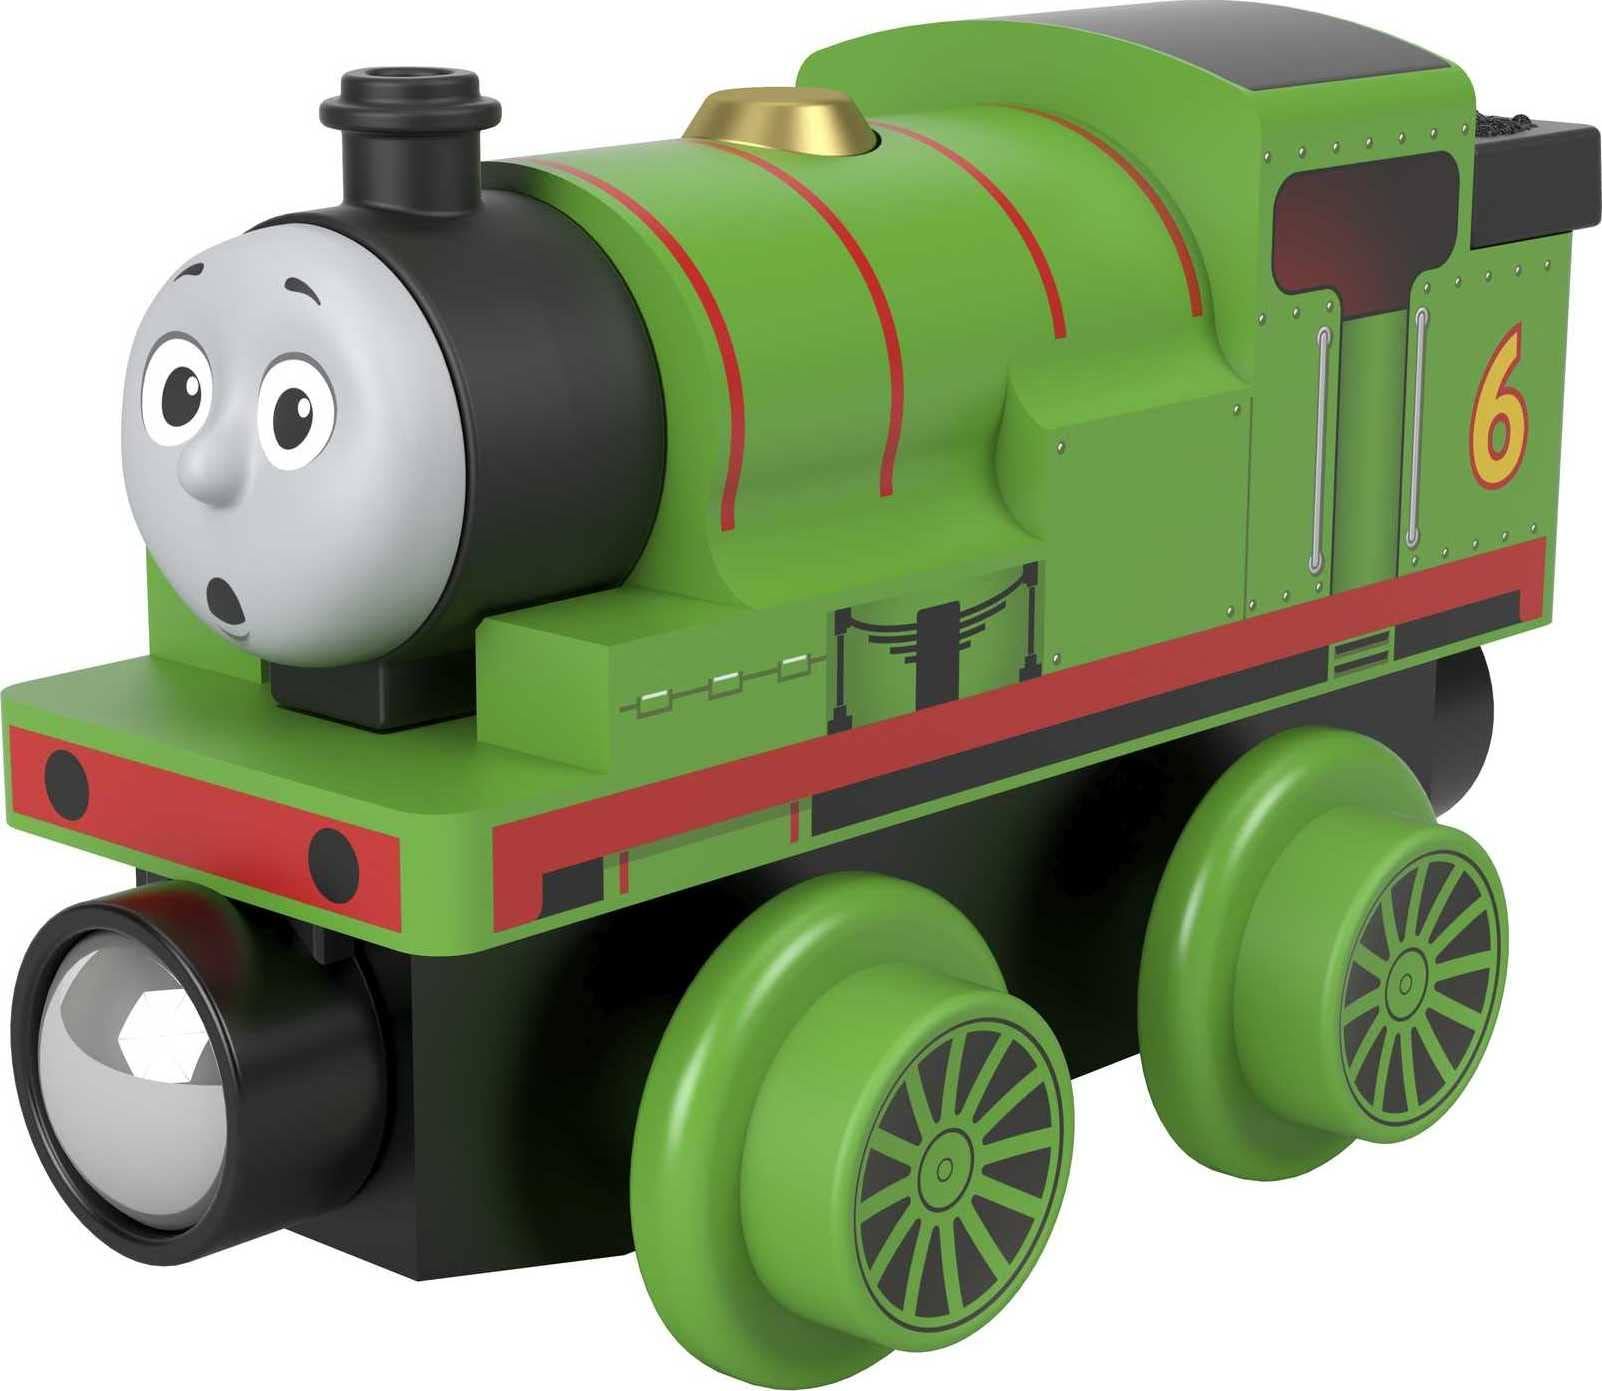 Thomas & Friends Wooden Railway - Percy Engine